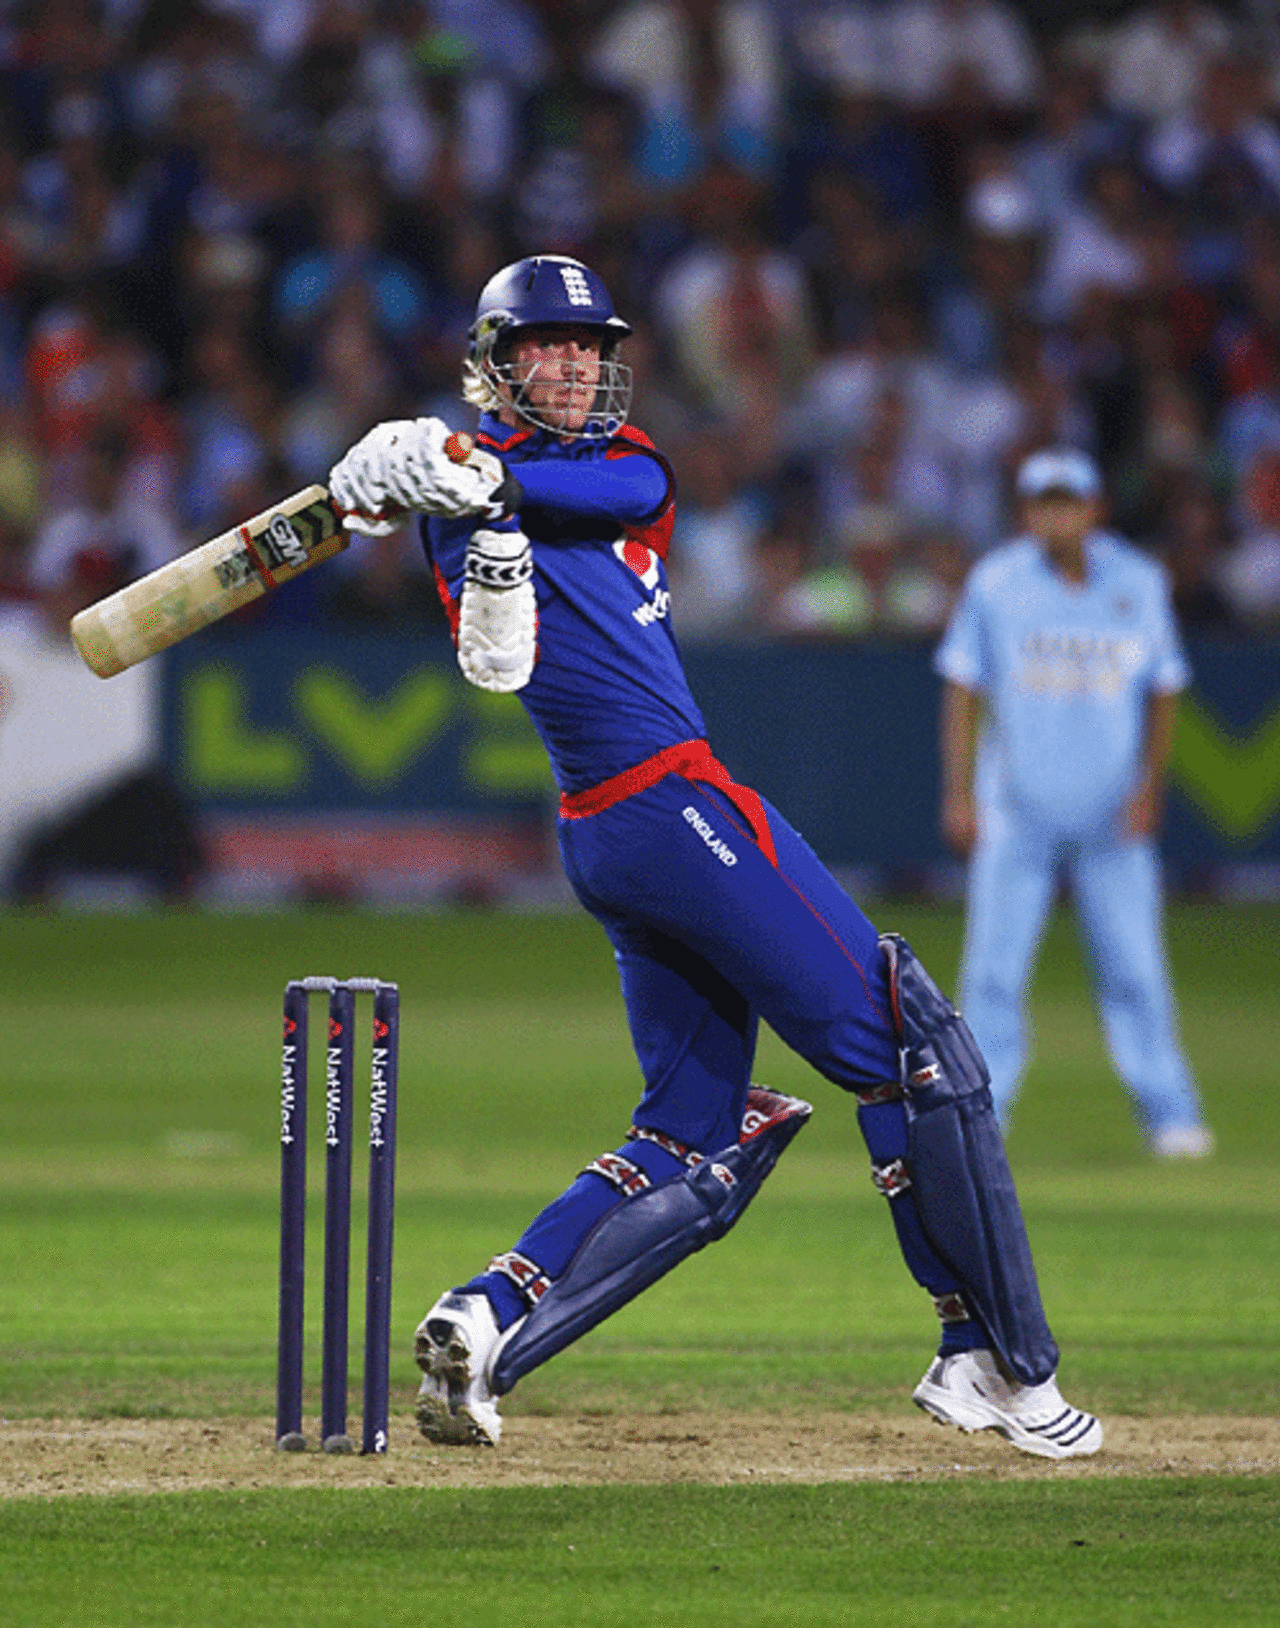 Stuart Broad threw his bat around in the last few overs but England still fell nine runs short, England v India, 2nd ODI, Bristol, August 24, 2007